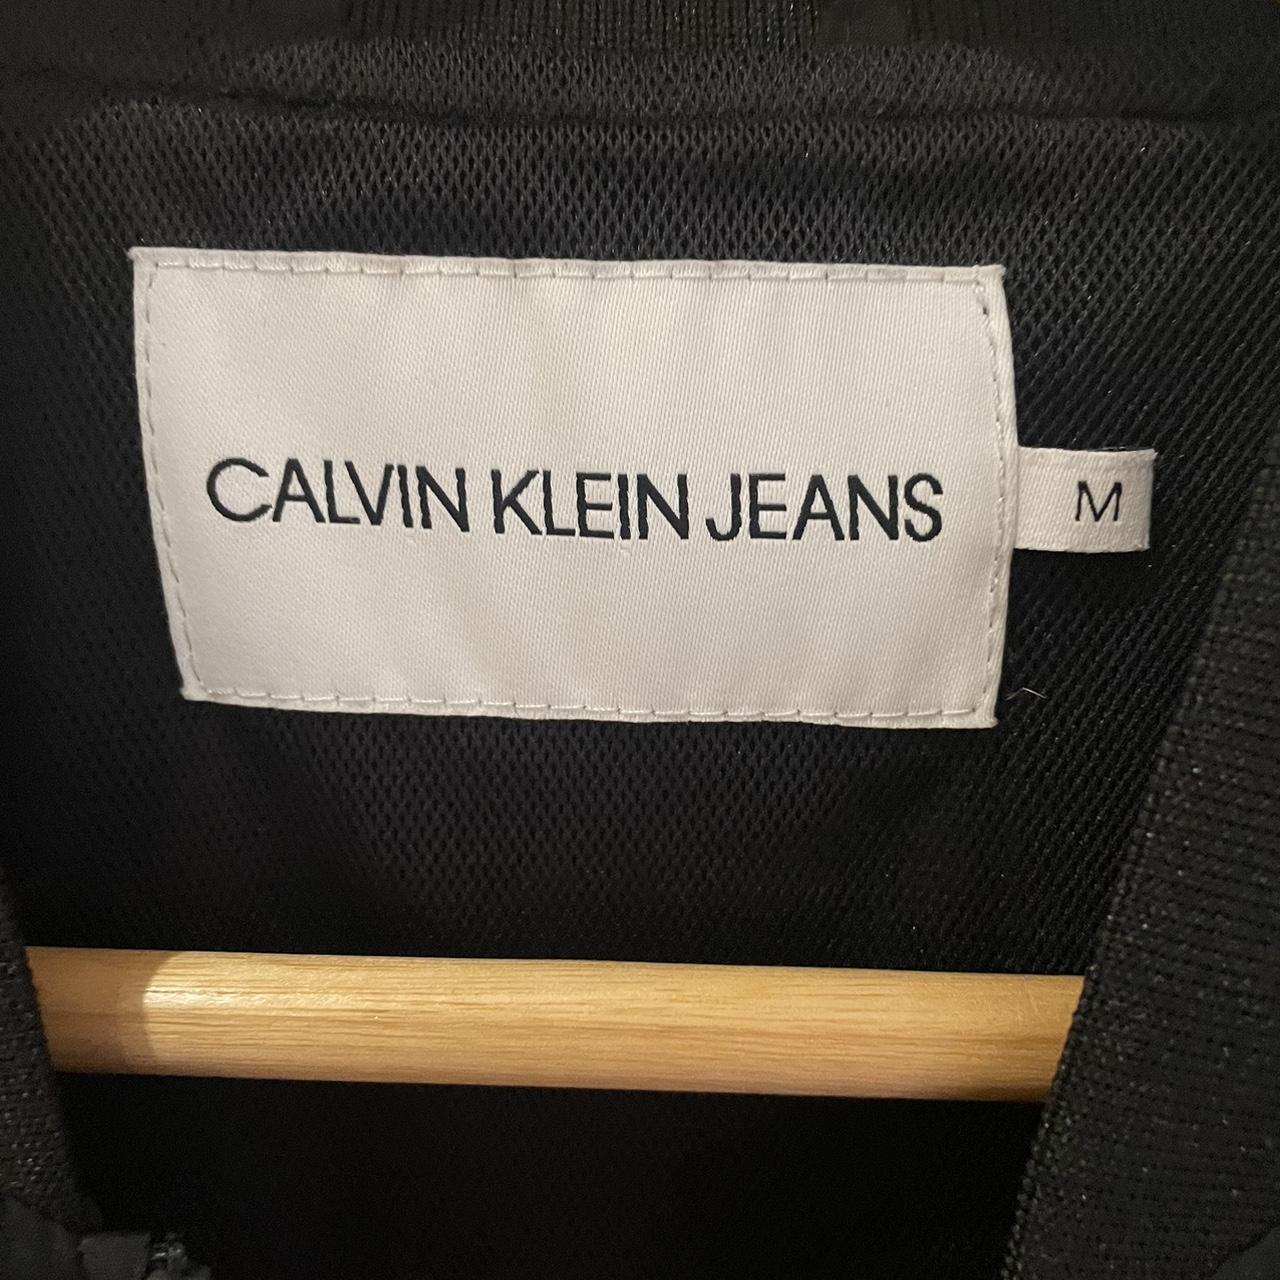 Calvin Klein jeans bomber jacket Like new size M - Depop